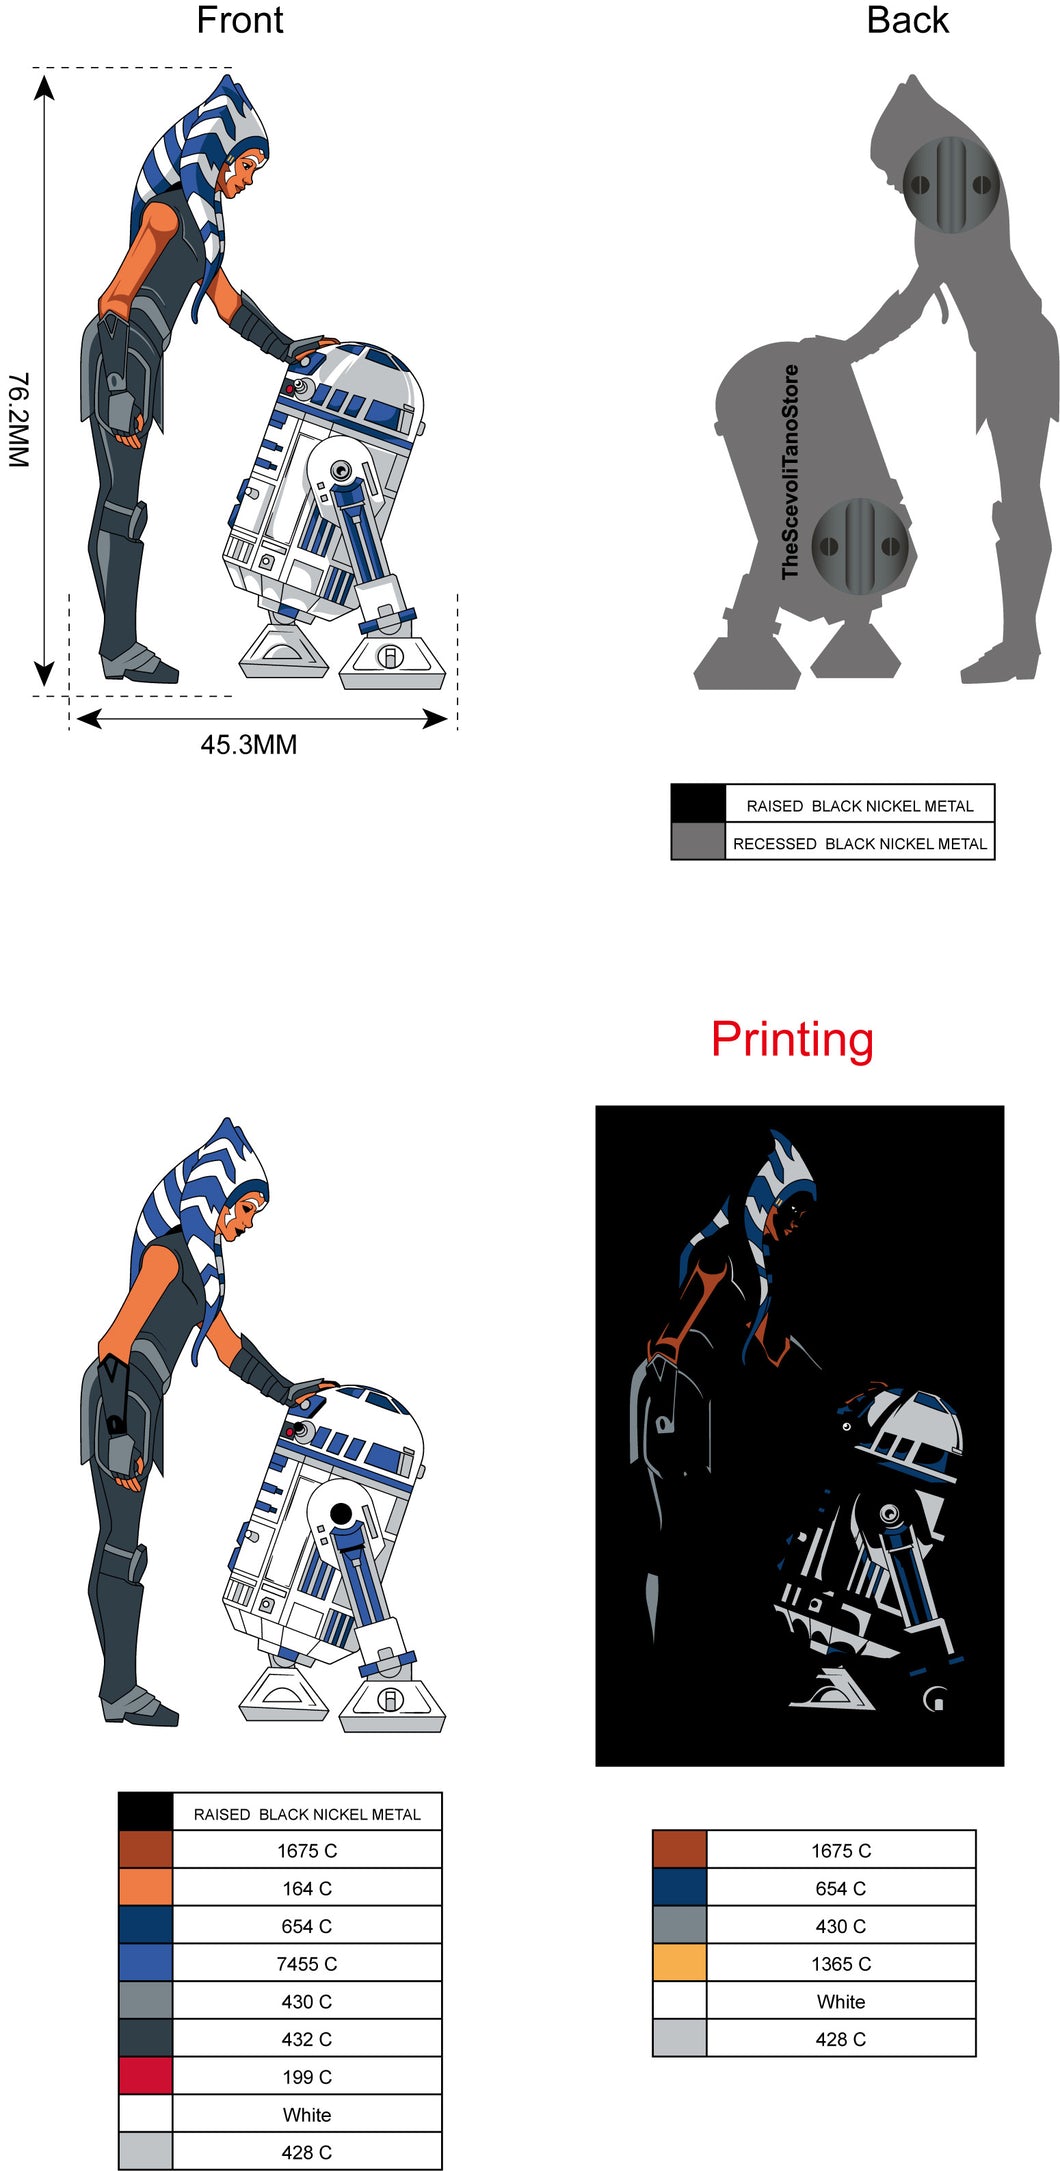 Ahsoka and R2